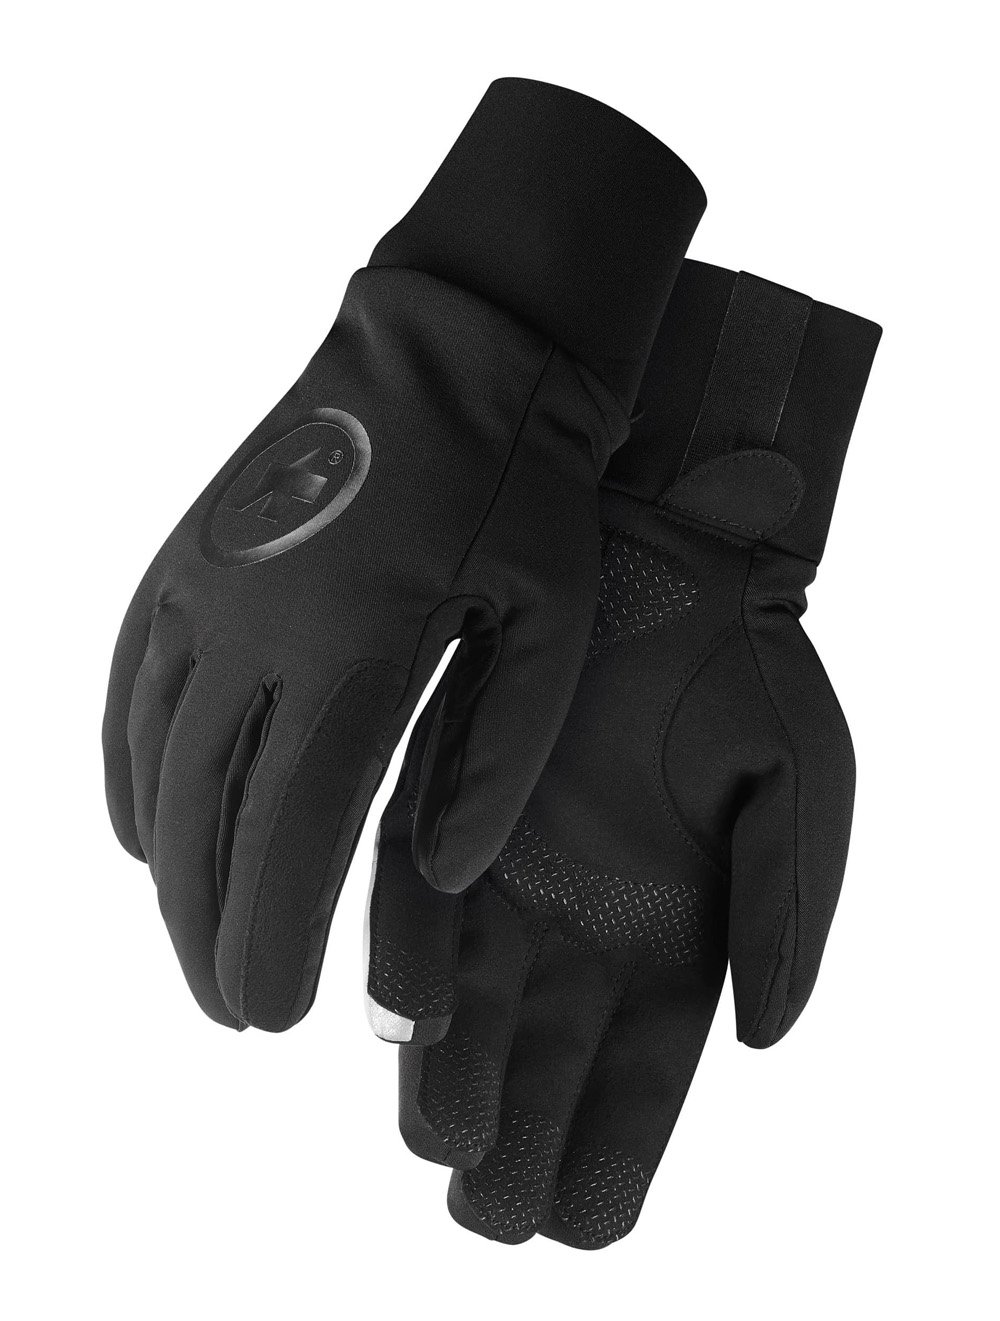 Assos Ultraz Winter Cycle - Bikable Gloves